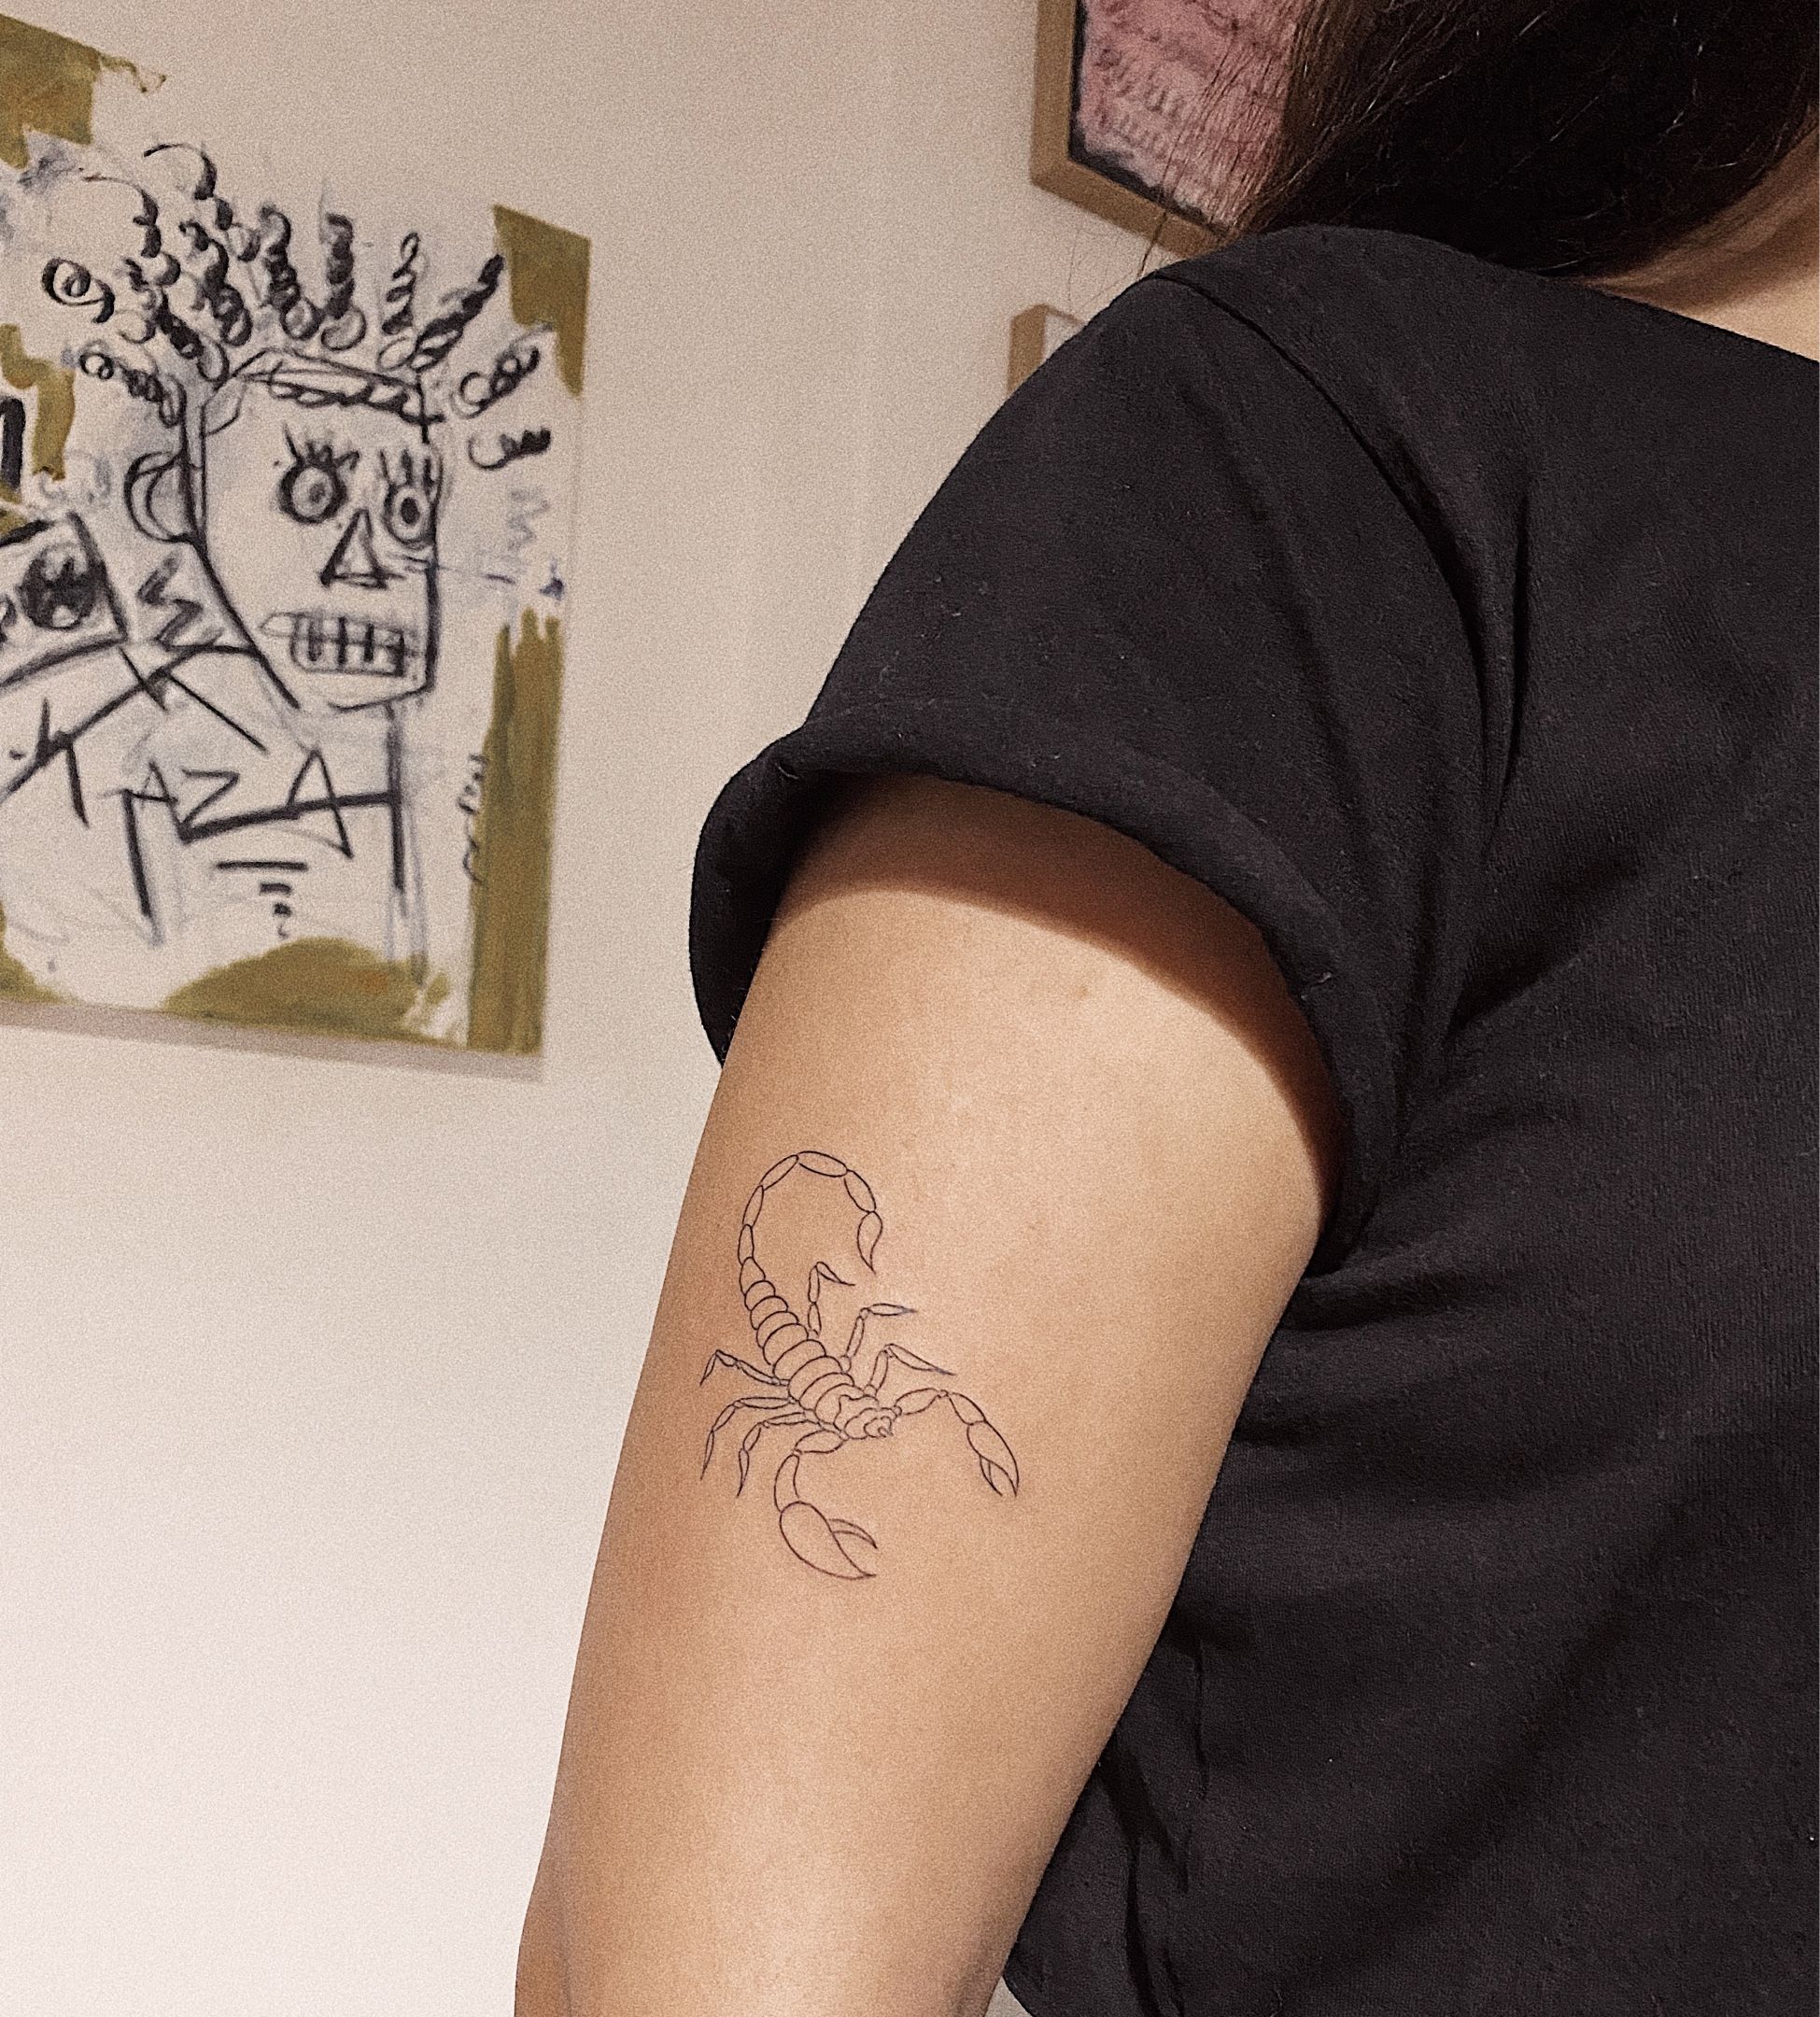 Scorpion🦂 tattoo for @_j.gonzalezz_ + + + #scorpio #blackandgreytattoo # tattoo #girltattoo #ny #nytattoo | Instagram